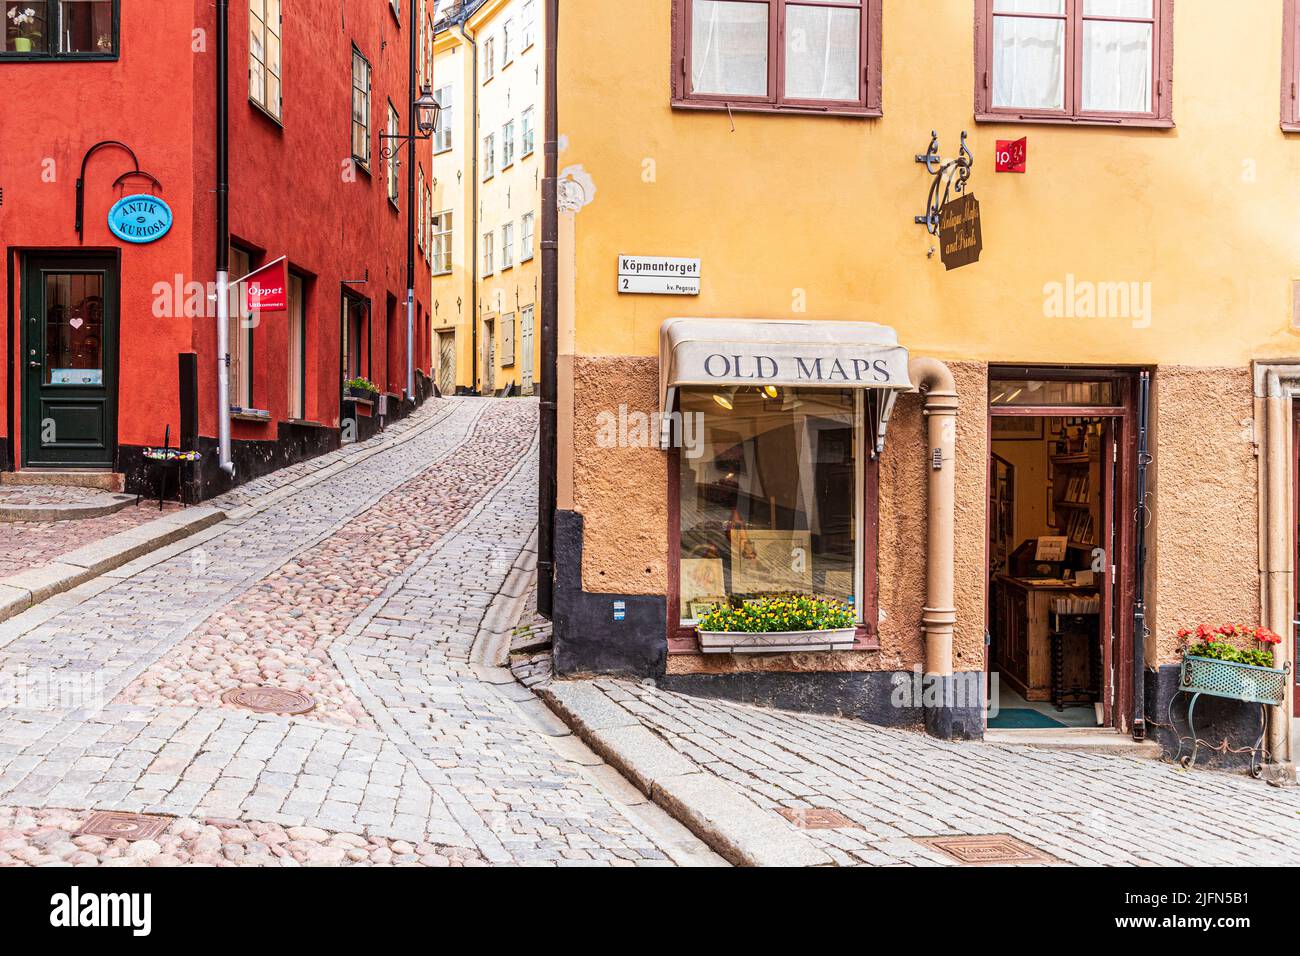 Ein Geschäft mit alten Karten in Kopmantorget, Gamla Stan (die Altstadt) in Stockholm, Schweden Stockfoto